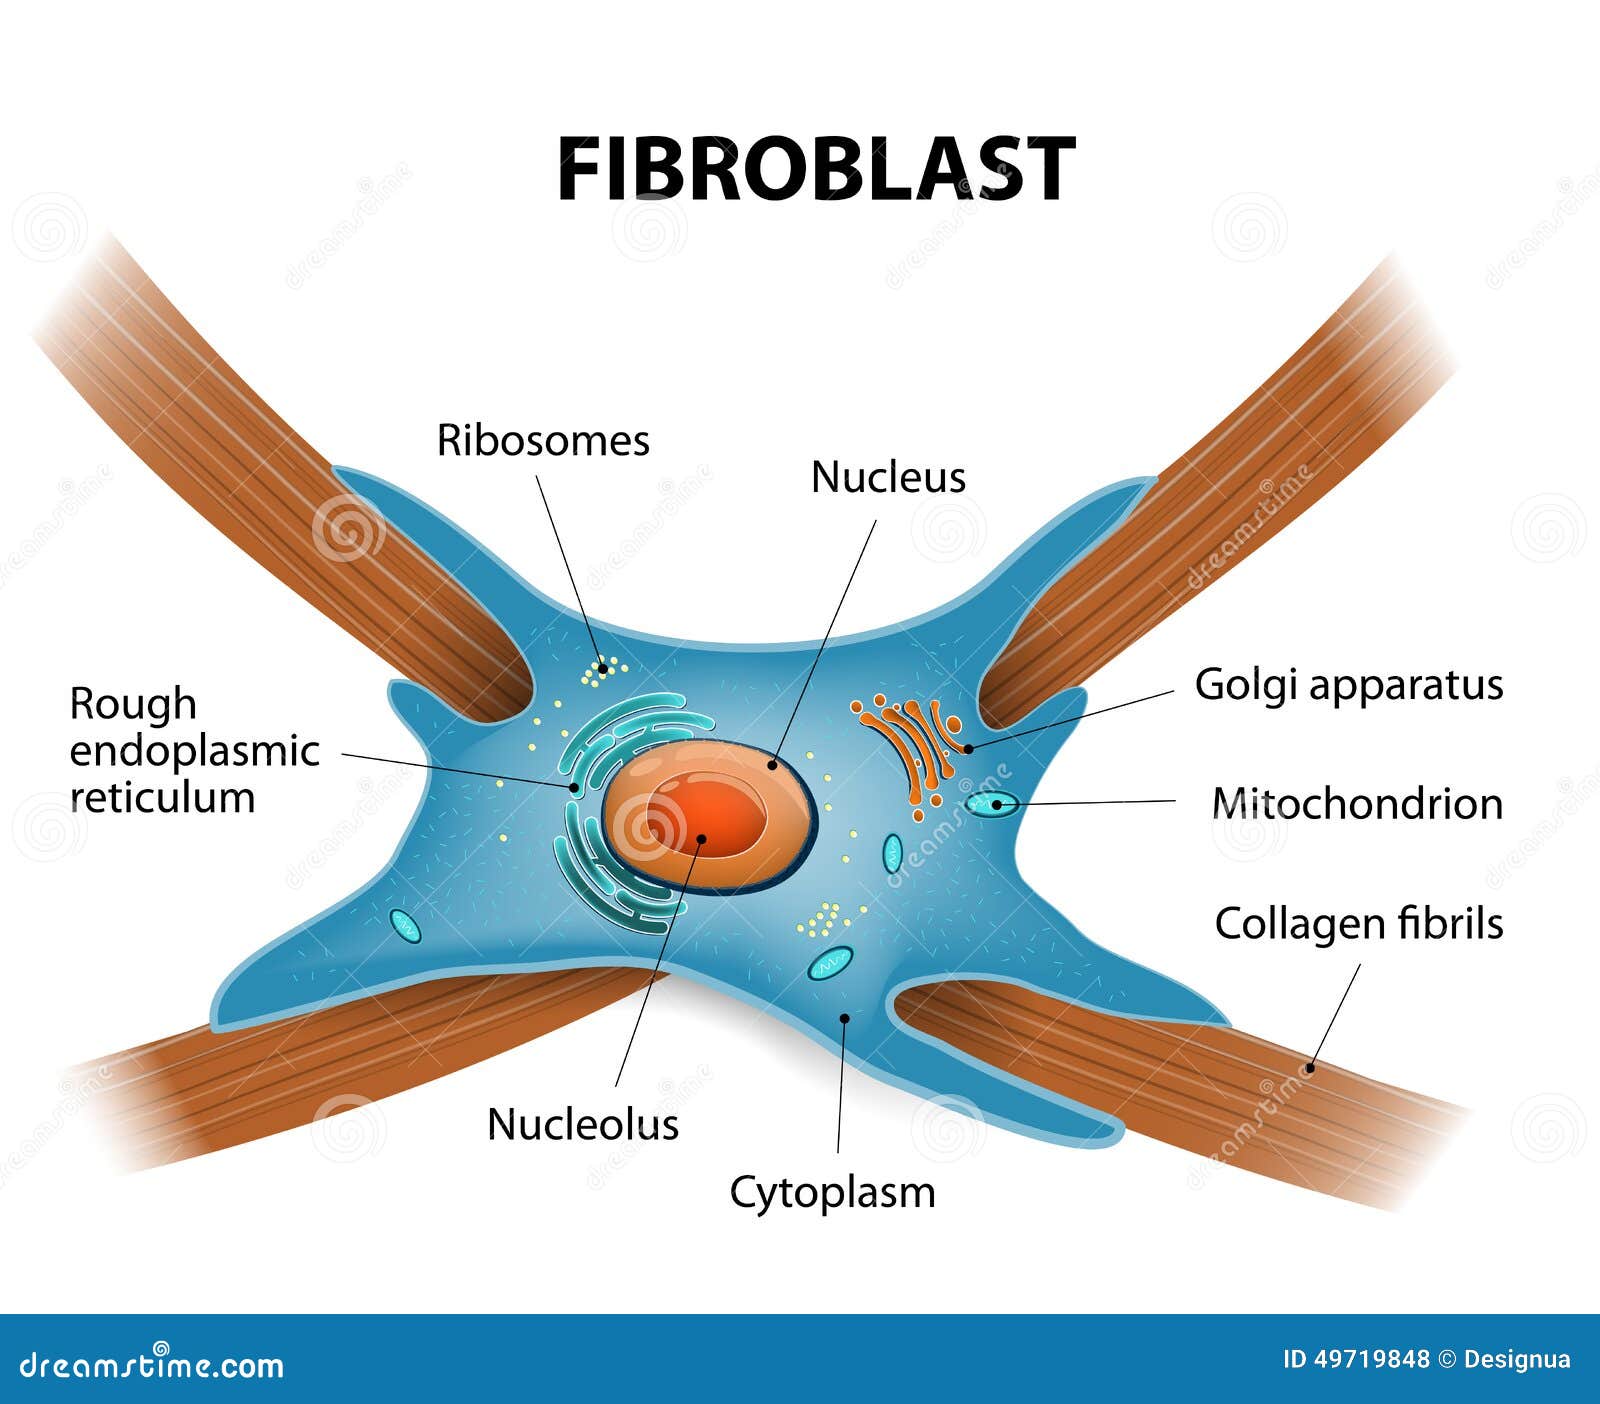 structure of fibroblast cells